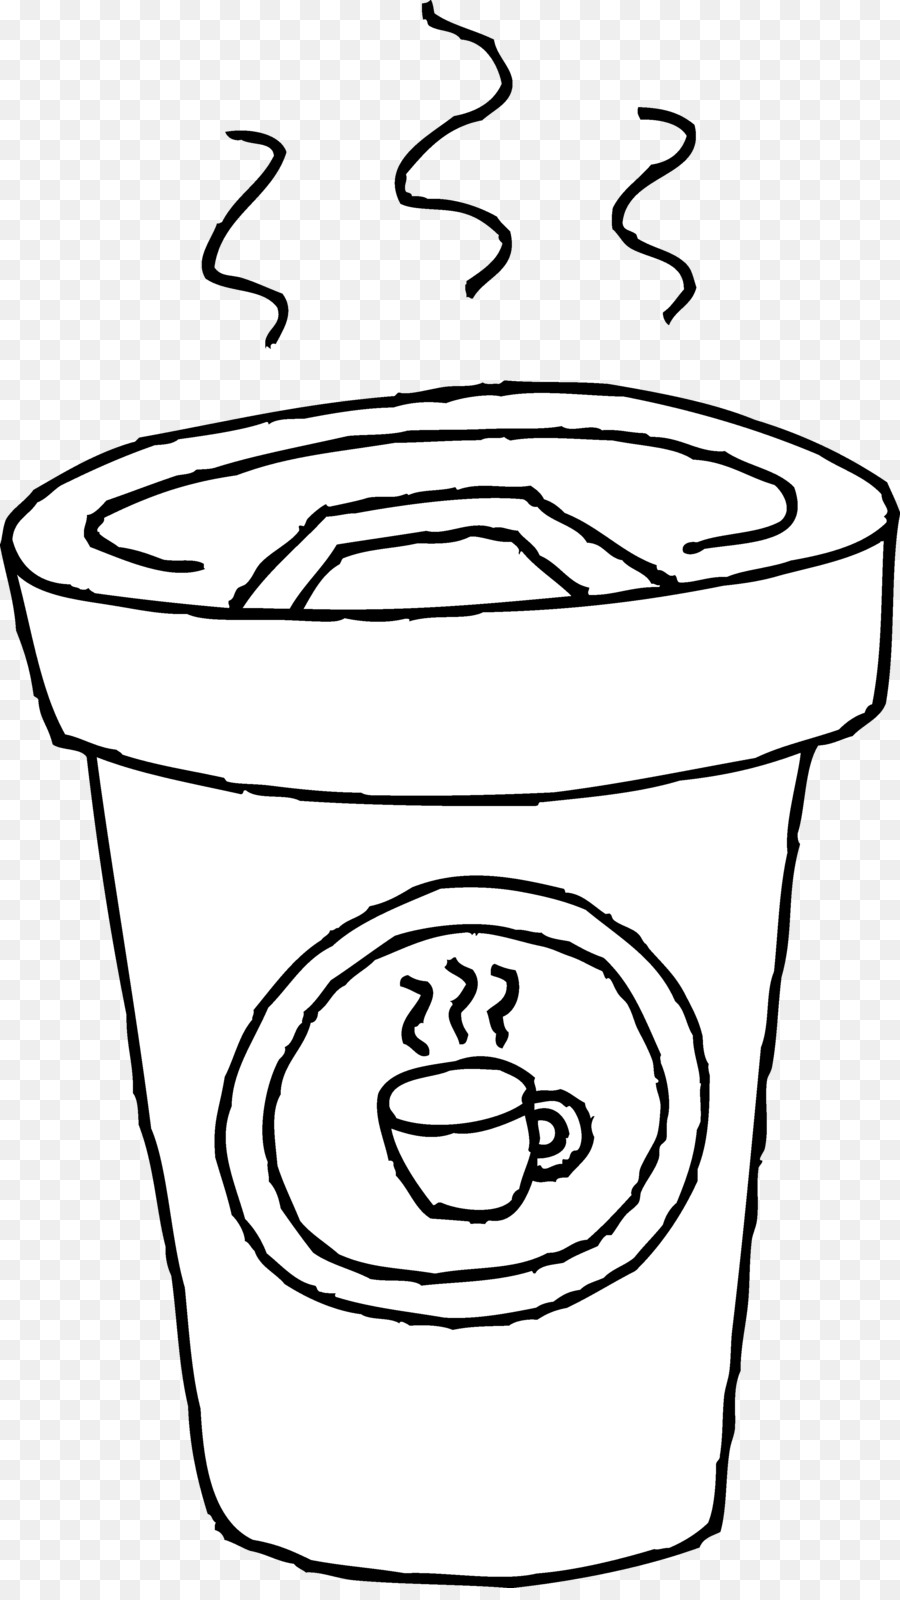 Coffee background . Starbucks clipart cup starbucks line